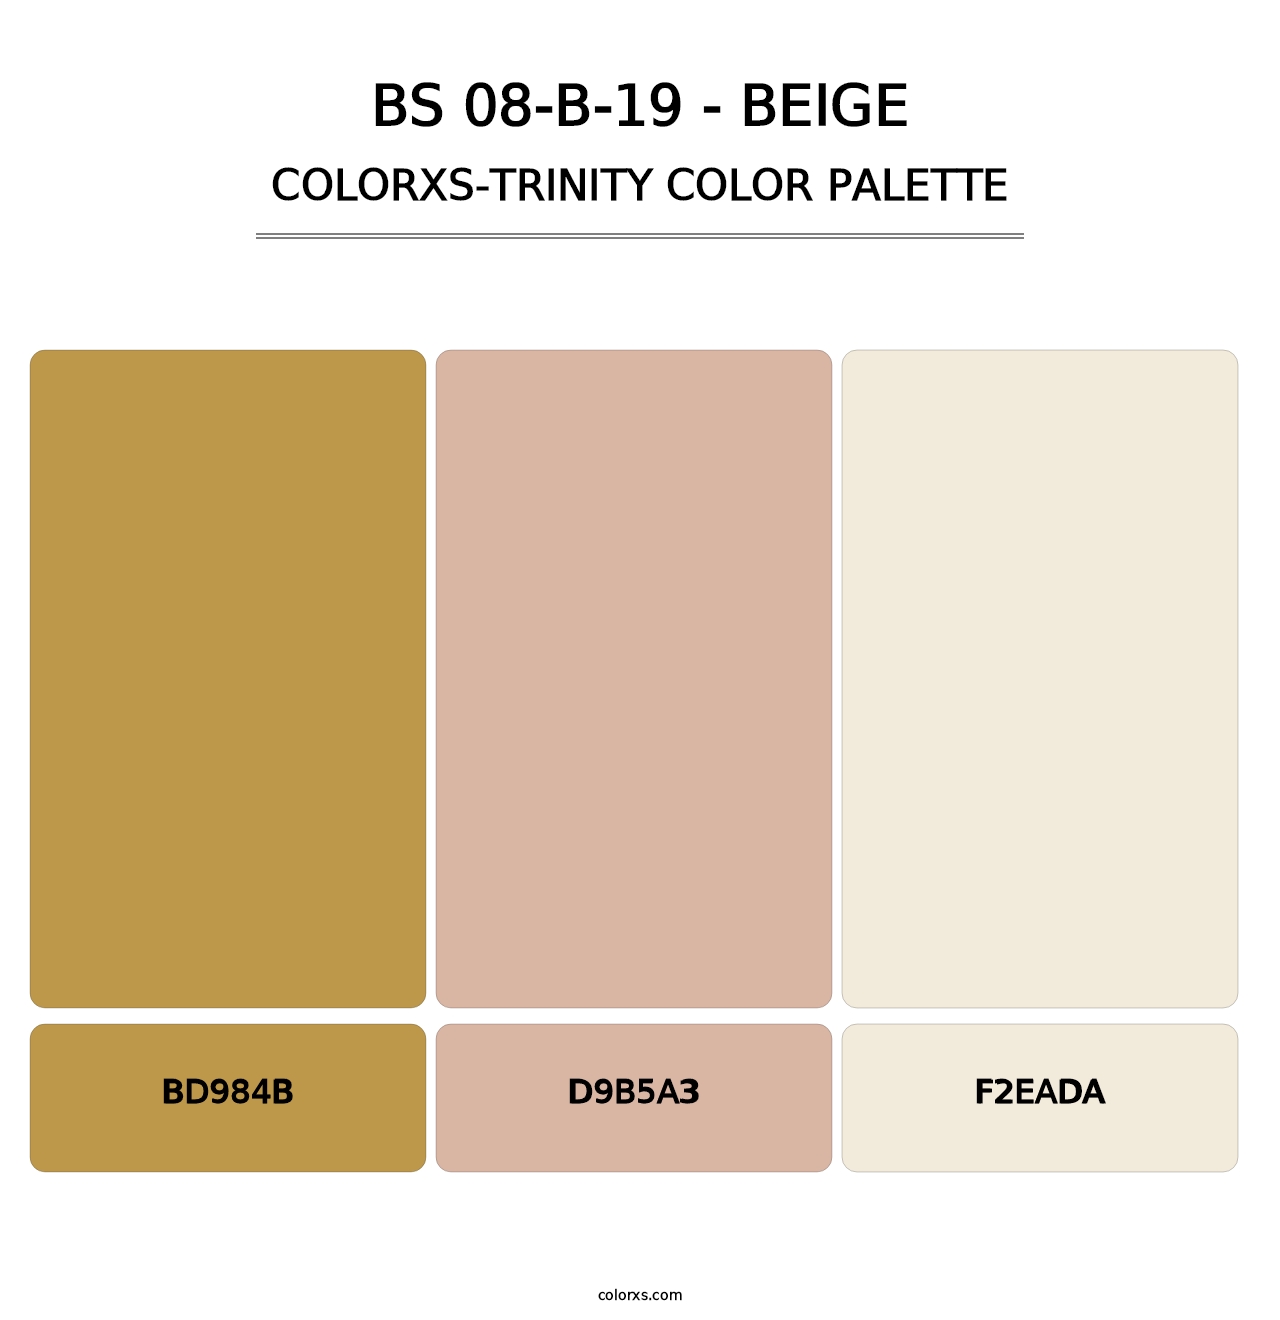 BS 08-B-19 - Beige - Colorxs Trinity Palette